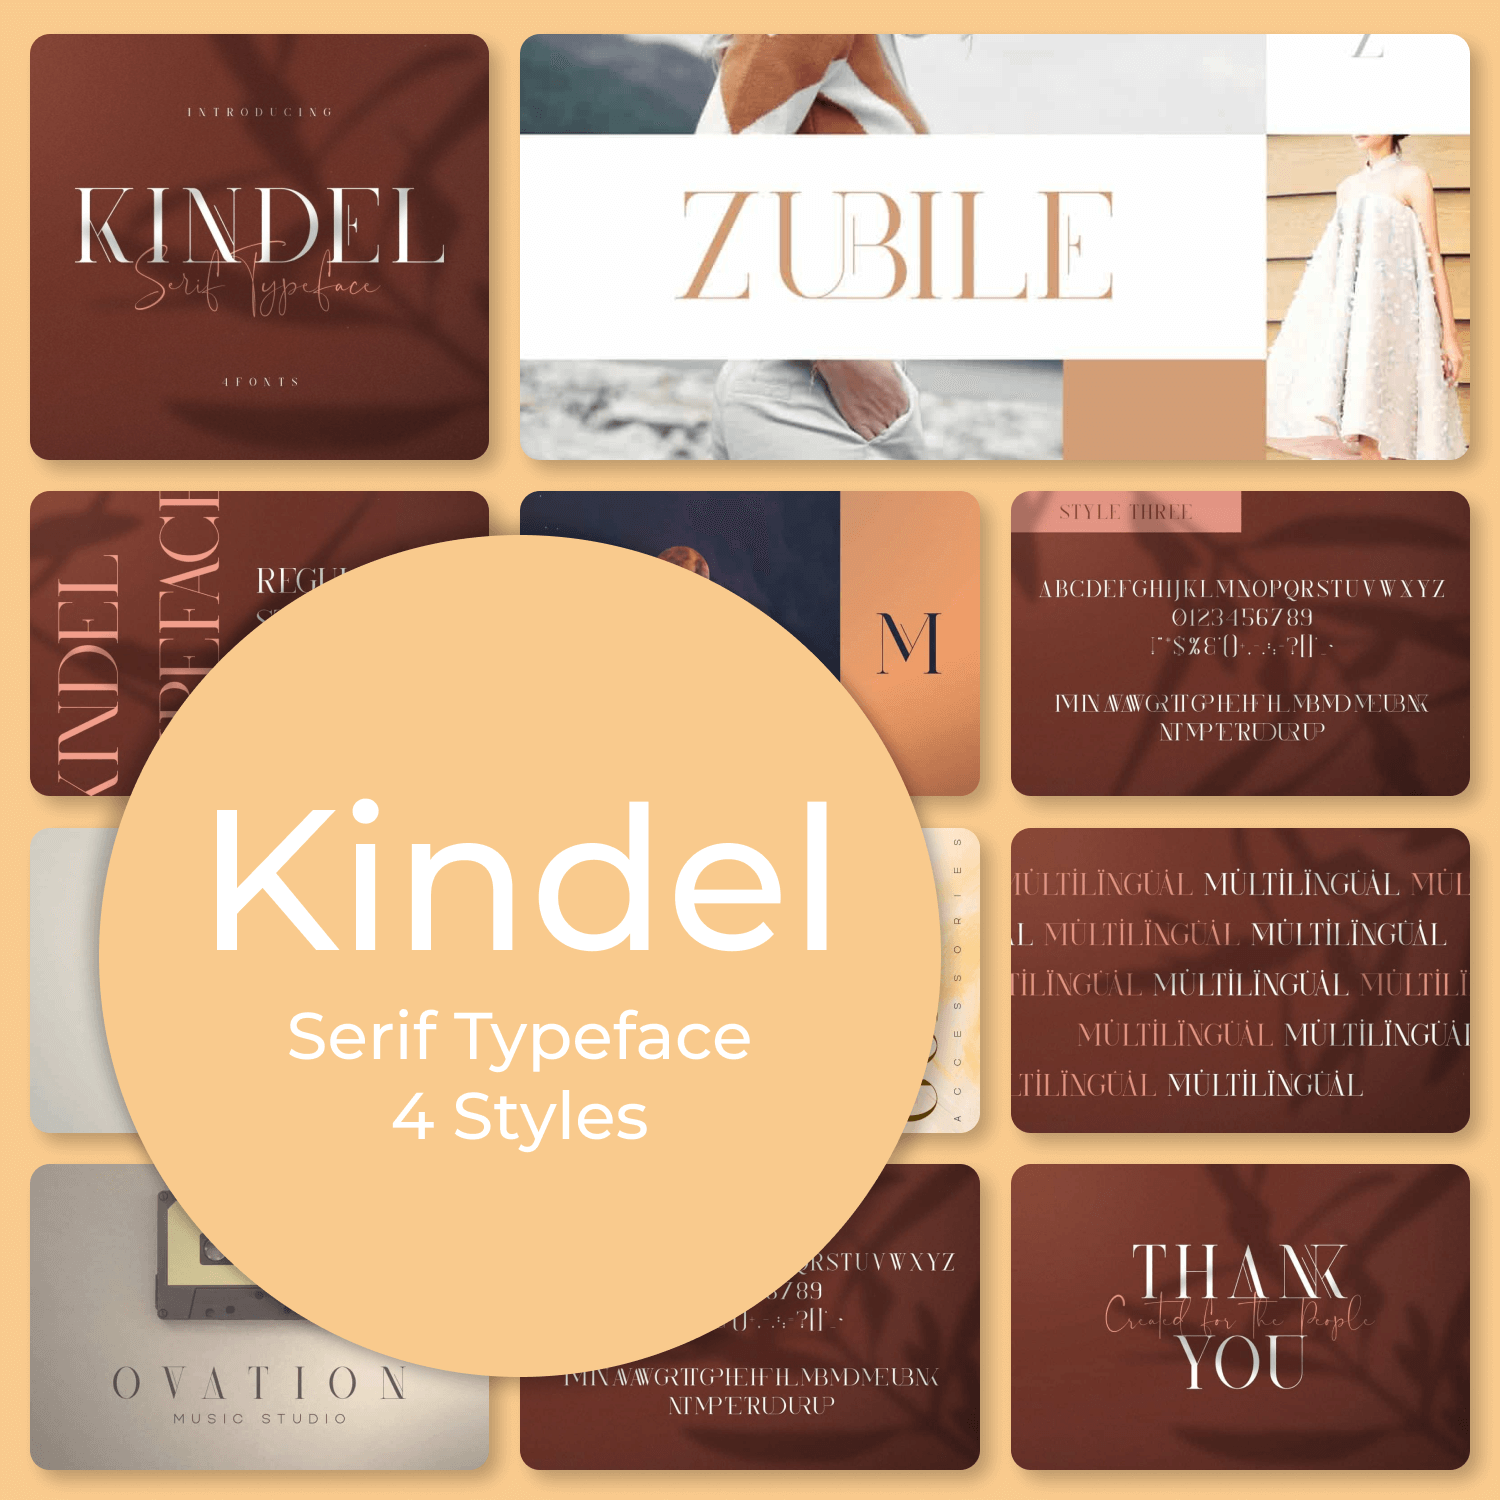 Kindel – Serif Typeface 4 Styles cover image.